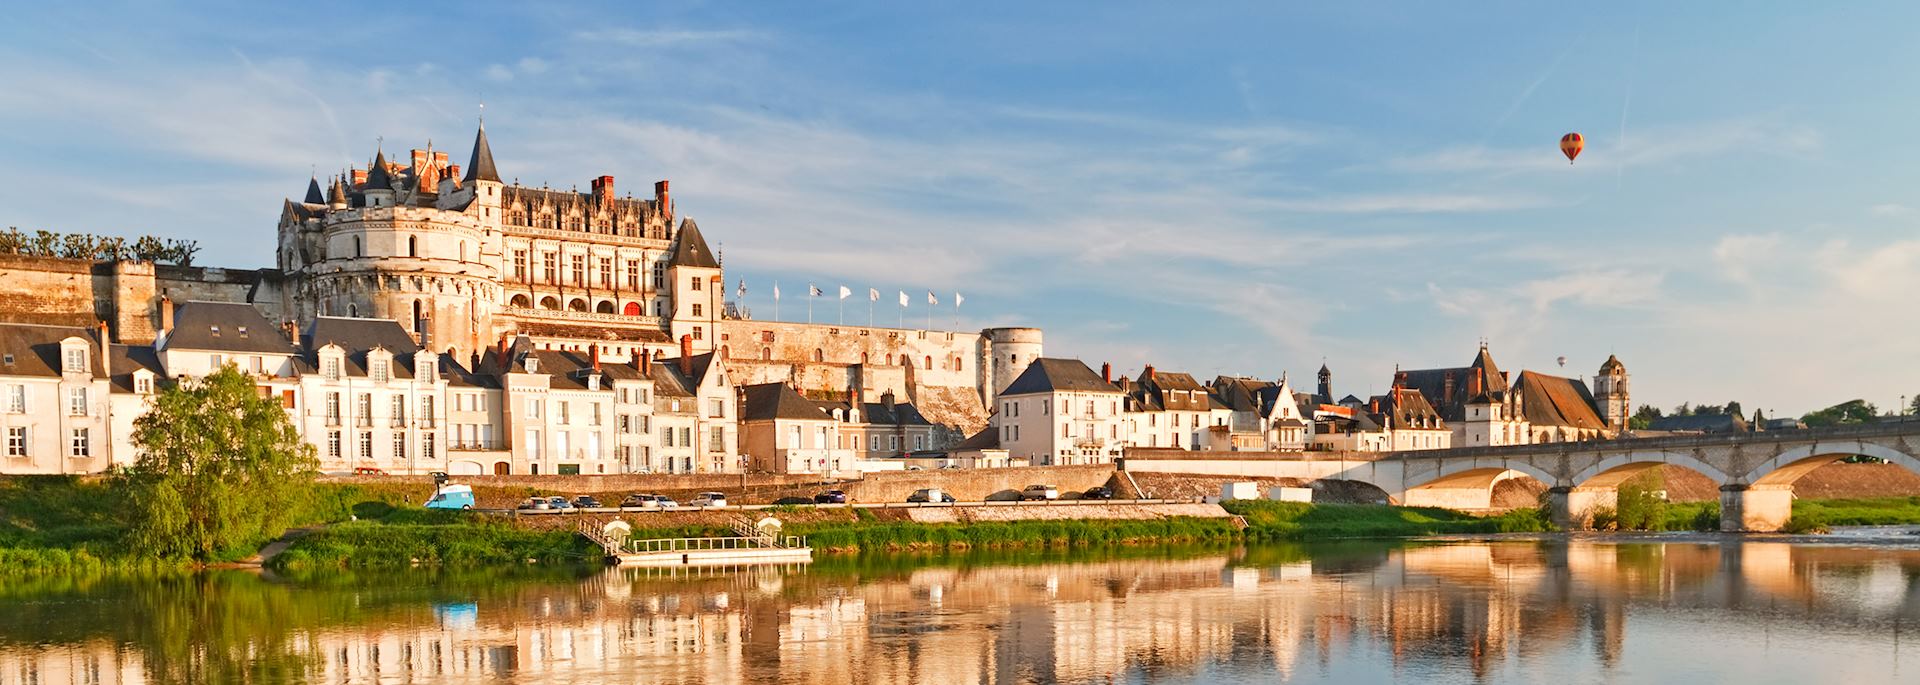 Amboise, Loire Valley